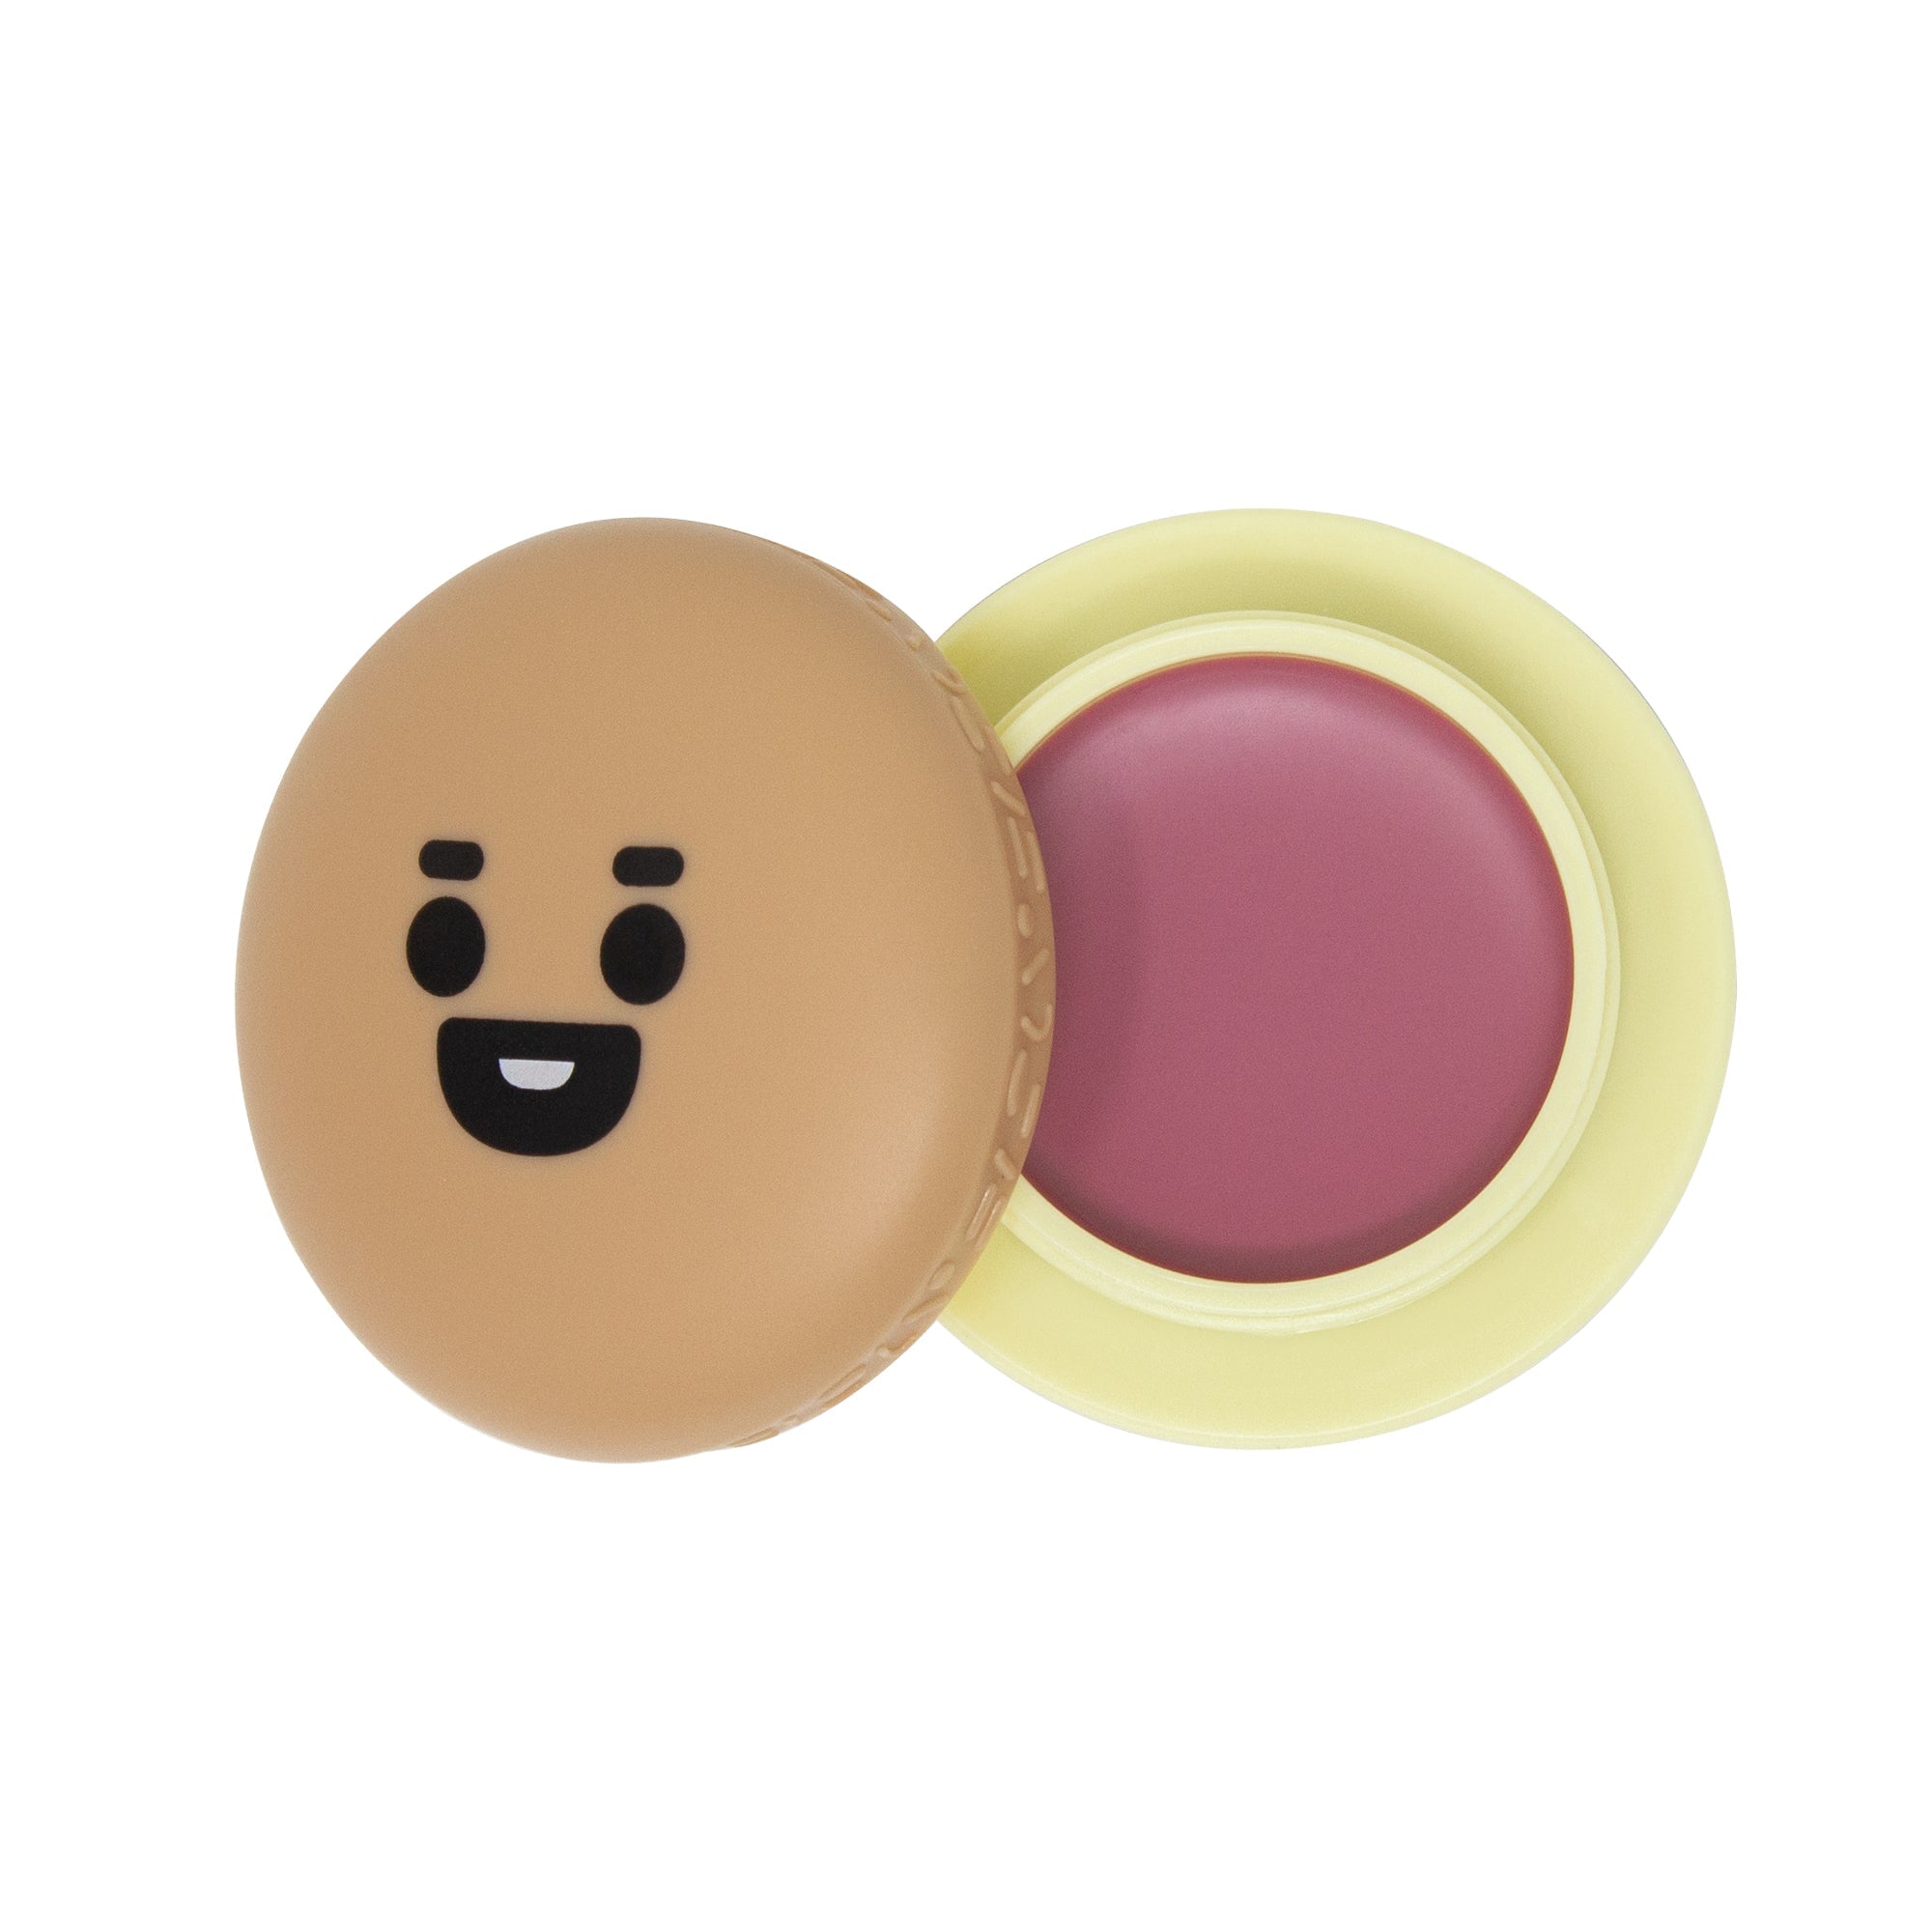 Hello Kitty & BT21 SHOOKY Moisturizing Macaron Lip Balm Duo - Brown Sugar Milk Tea Flavored